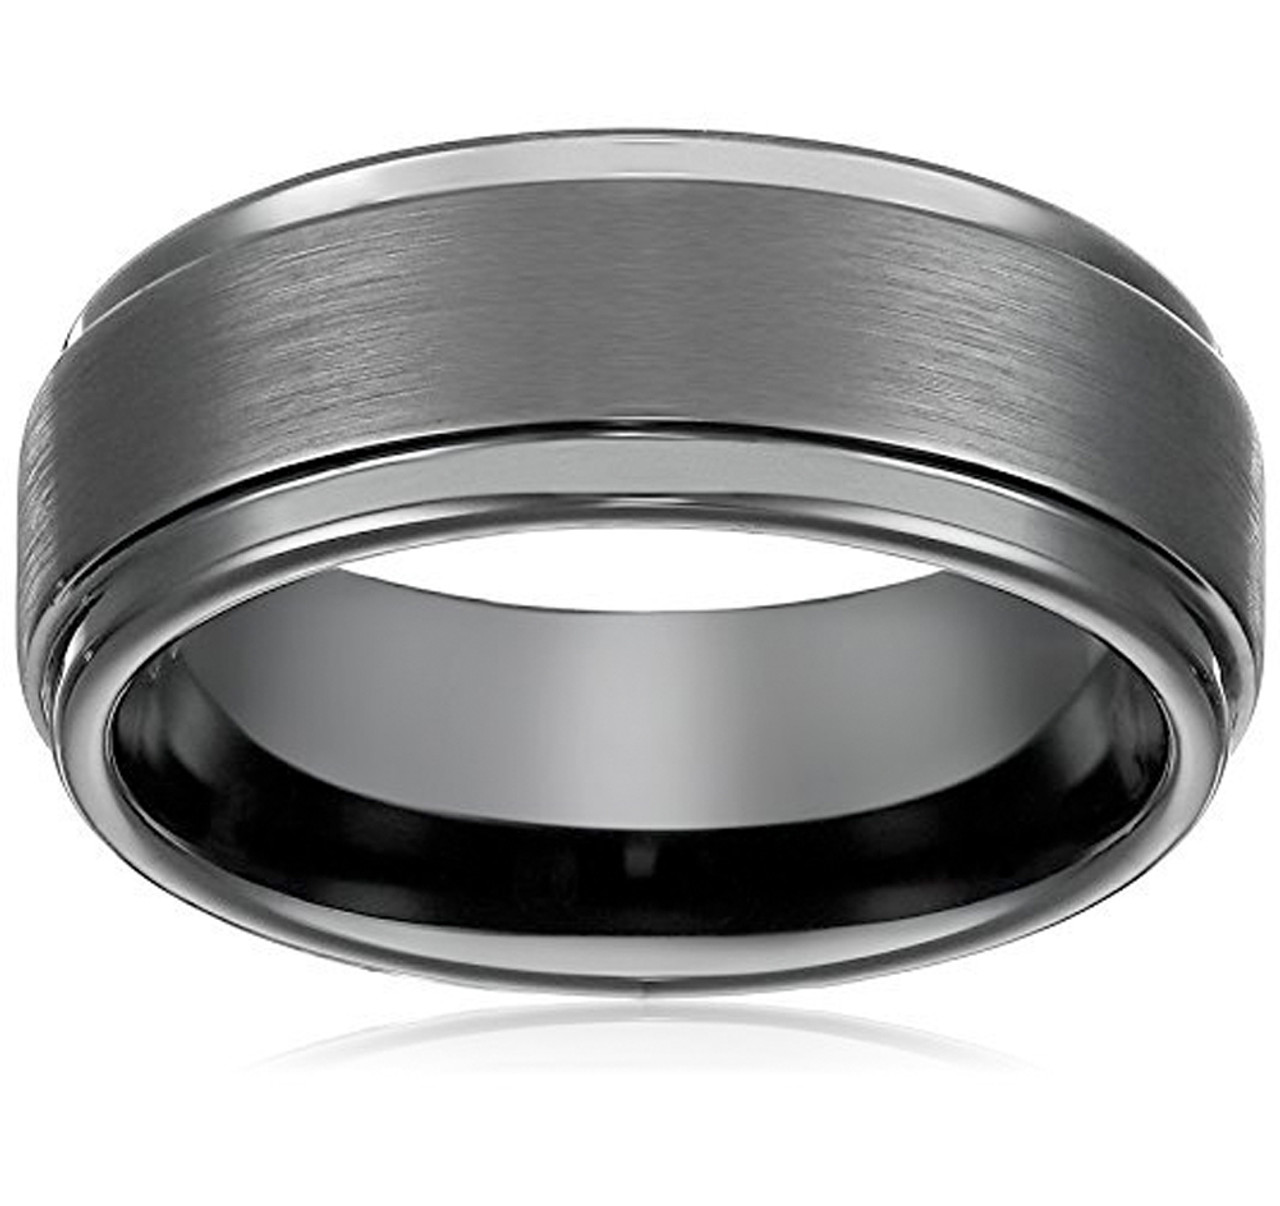 8mm - Unisex or Men's Tungsten Wedding Bands. Black High Polish Sides and Matte Finish. Tungsten Carbide Comfort Fit.